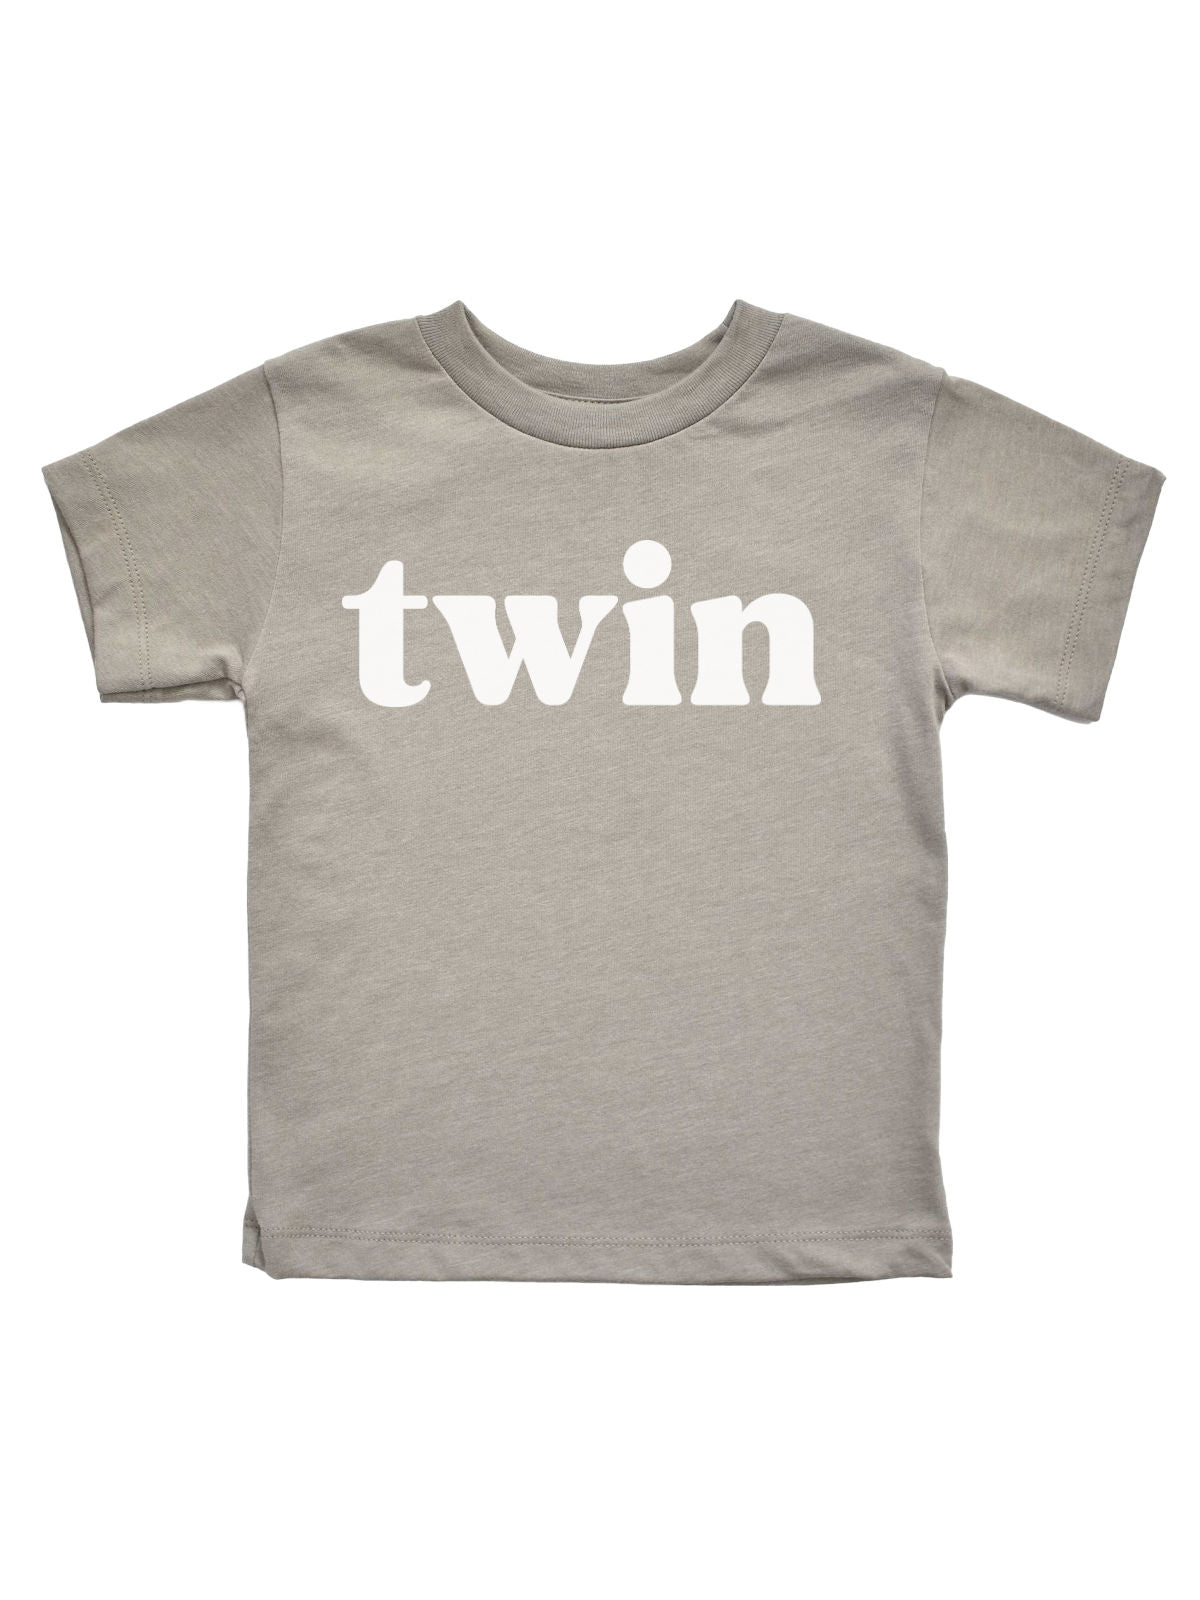 Kids Twin Shirt in Stone